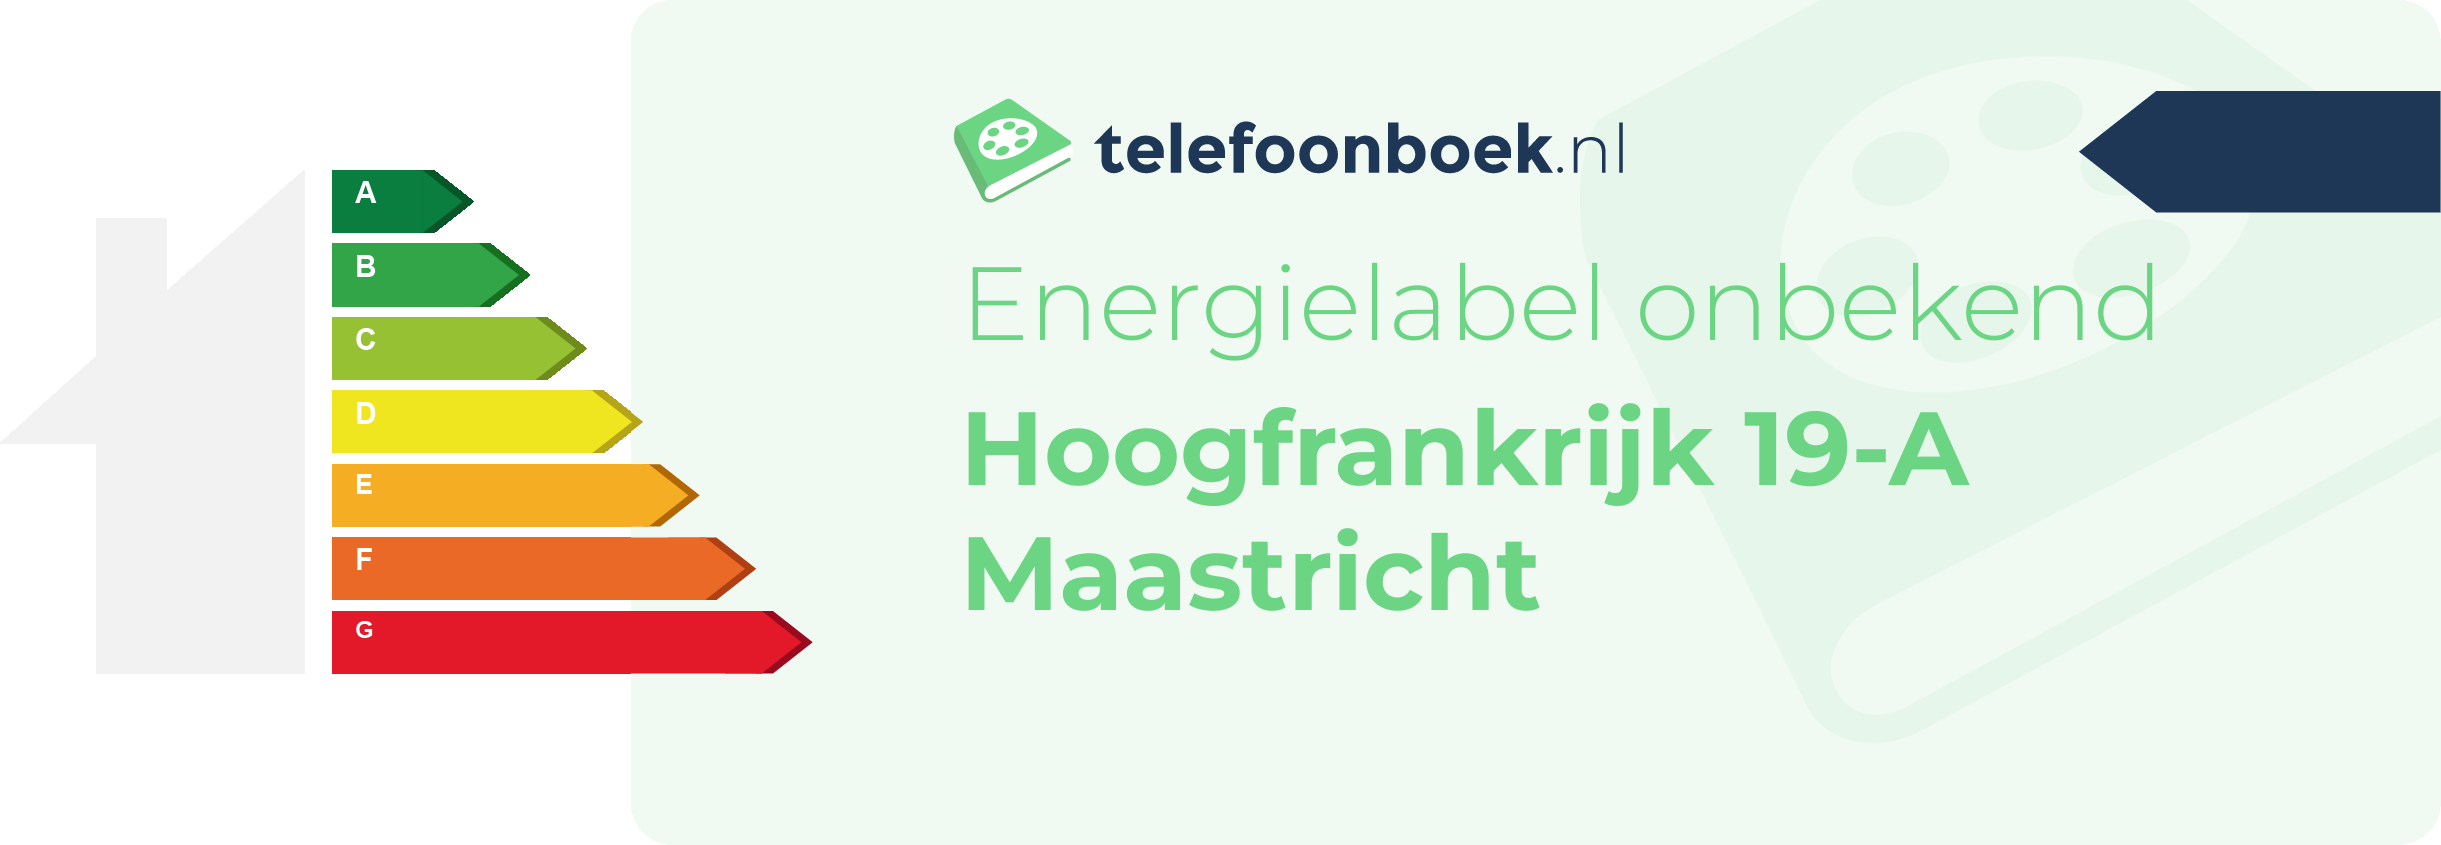 Energielabel Hoogfrankrijk 19-A Maastricht